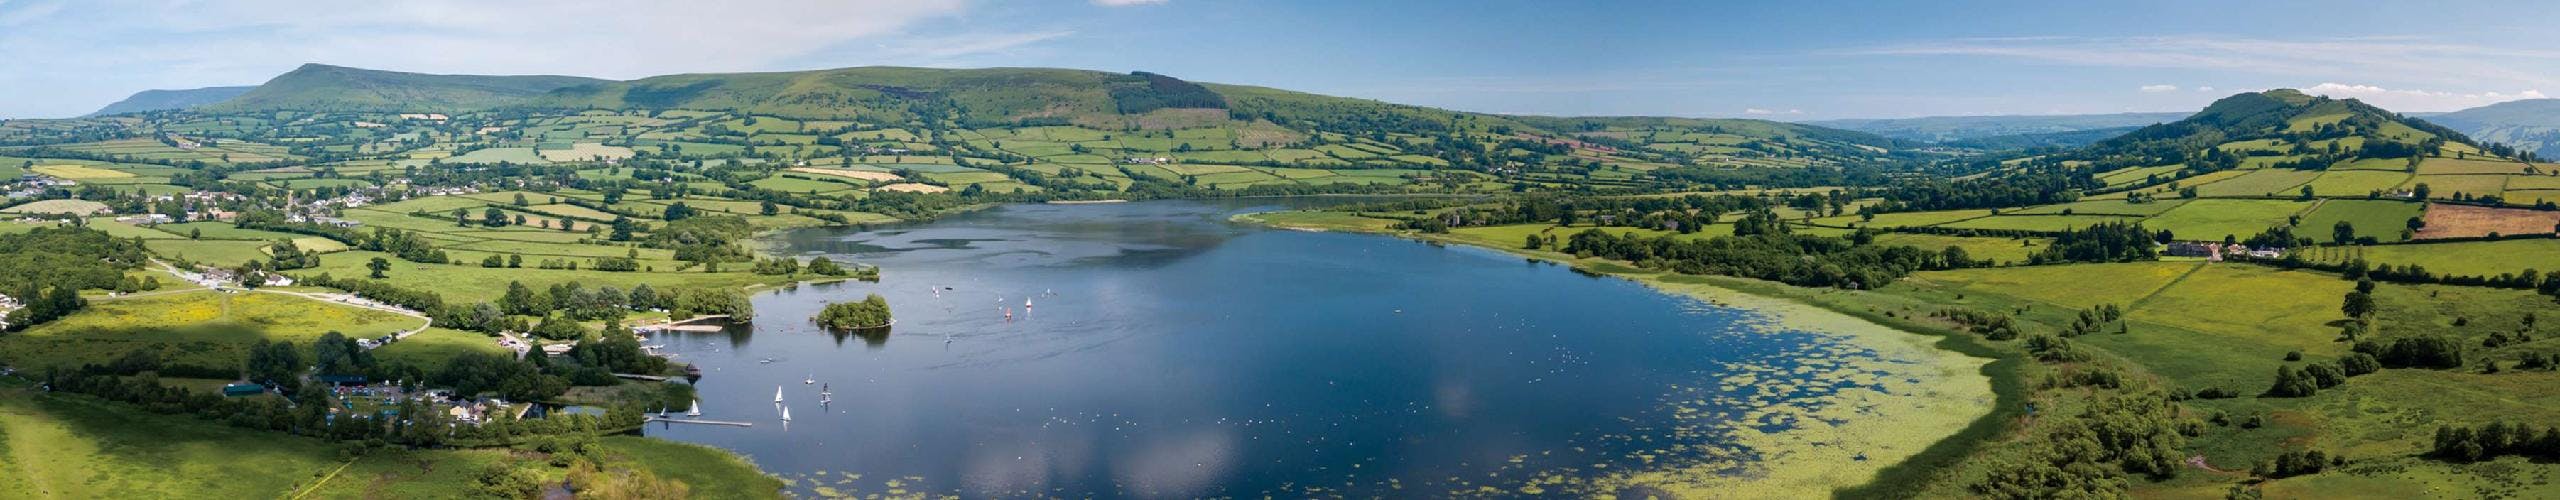 Photo of Llangorse Lake, Powys